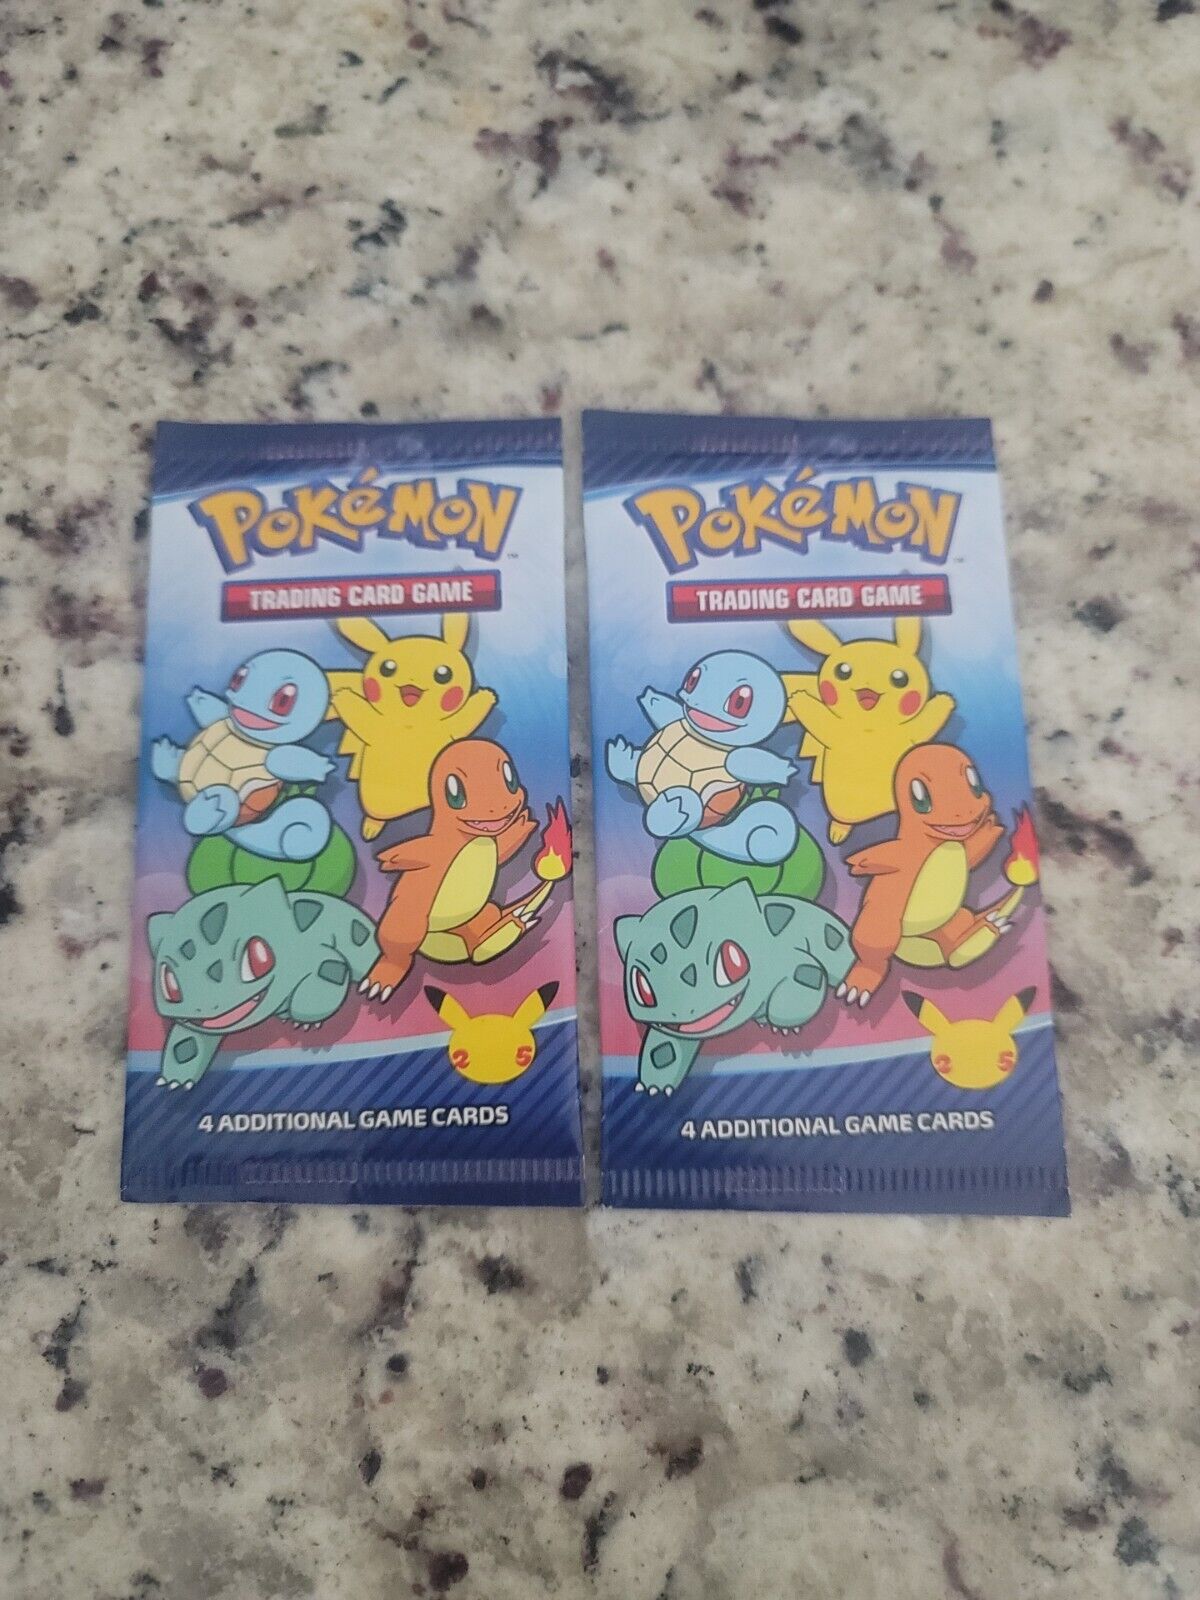 2x Pokémon Trading Card Packs 4 Cards Each Pack Brand New